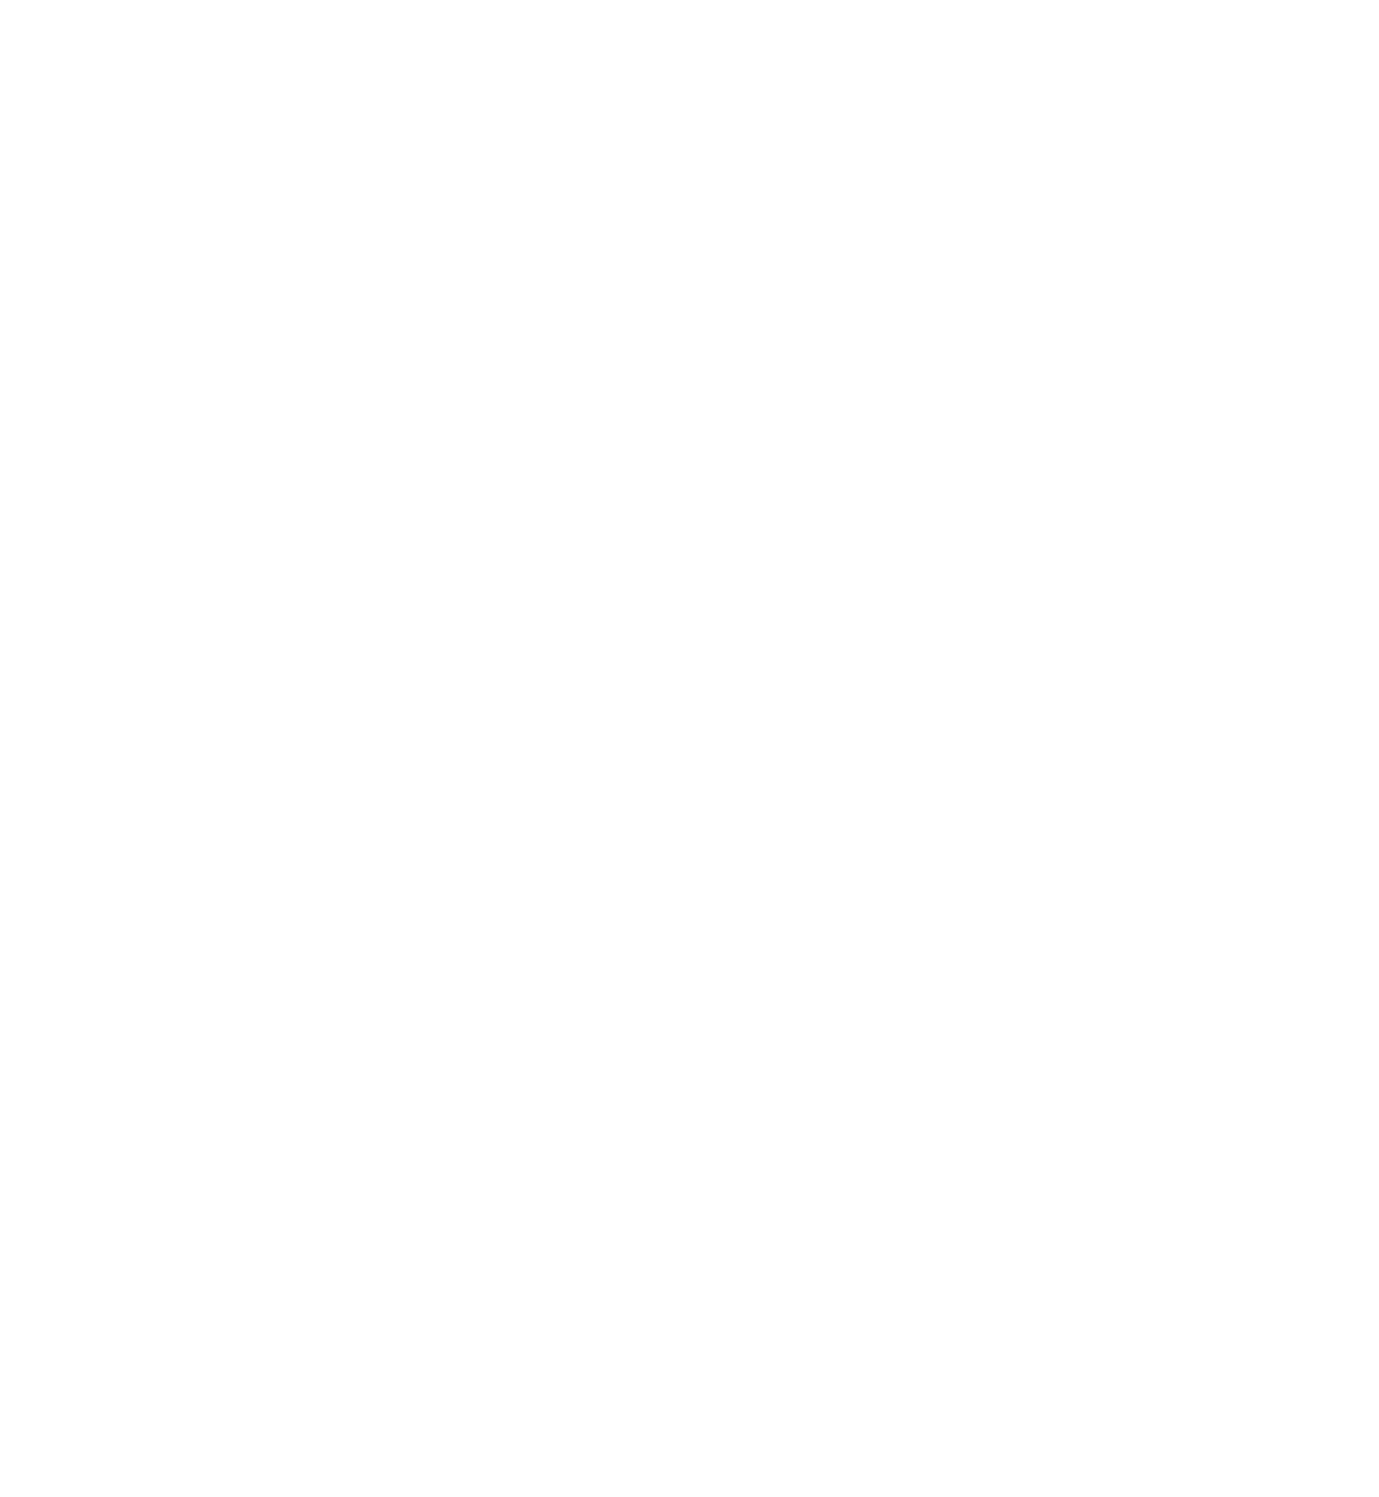 Veris Residential logo for dark backgrounds (transparent PNG)